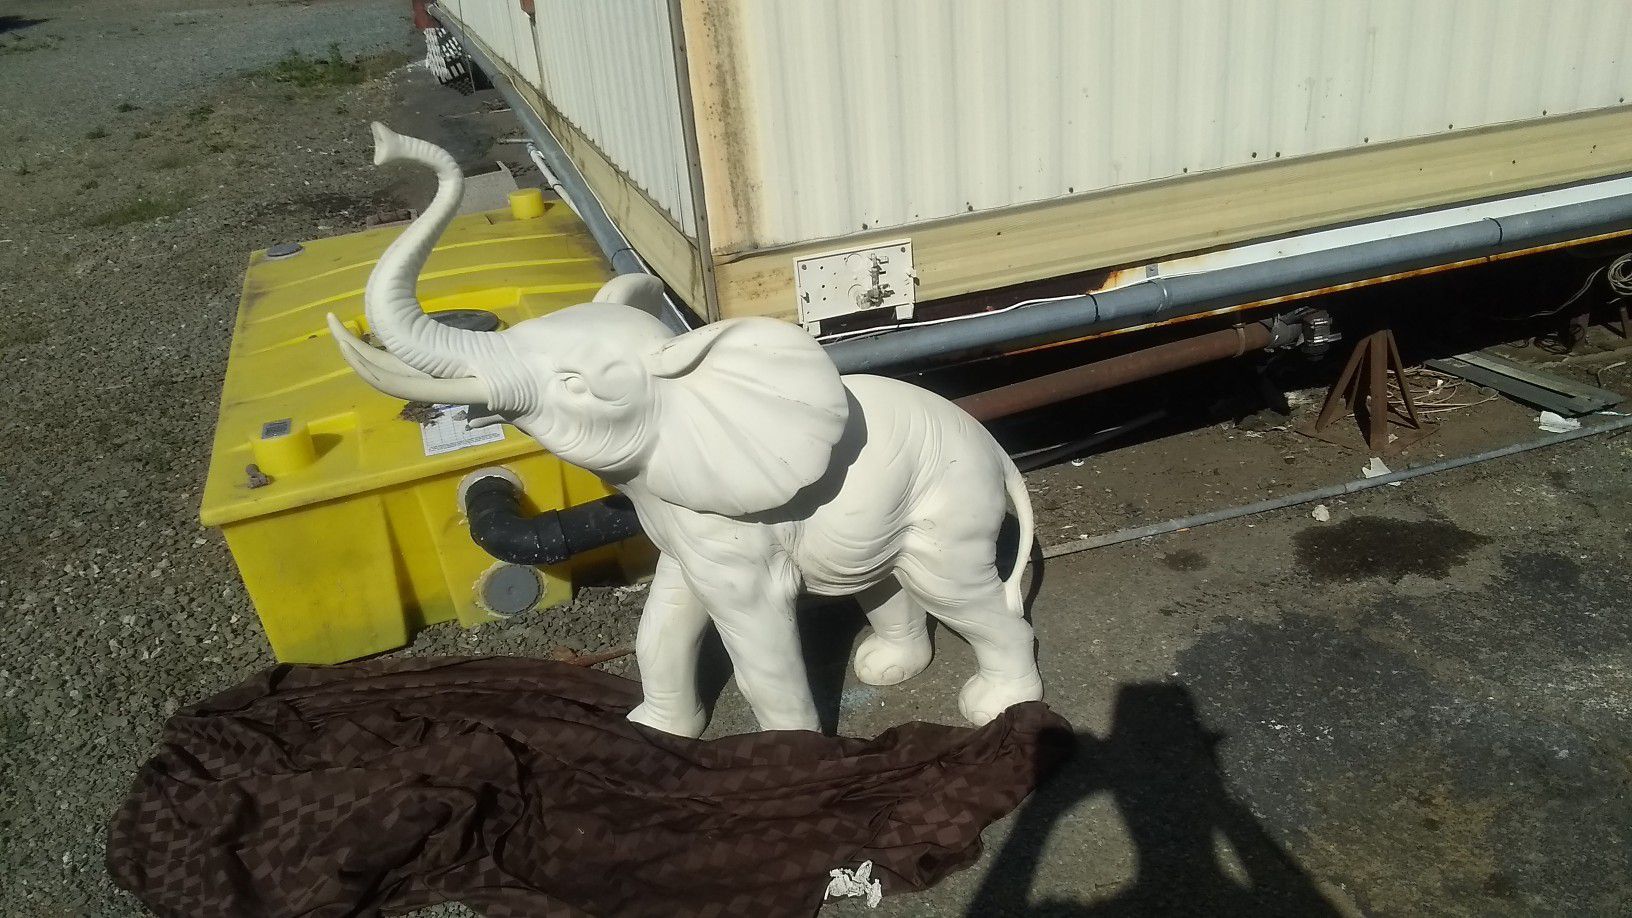 White white elephant 3 feet high 100 lb it's not made of plastic